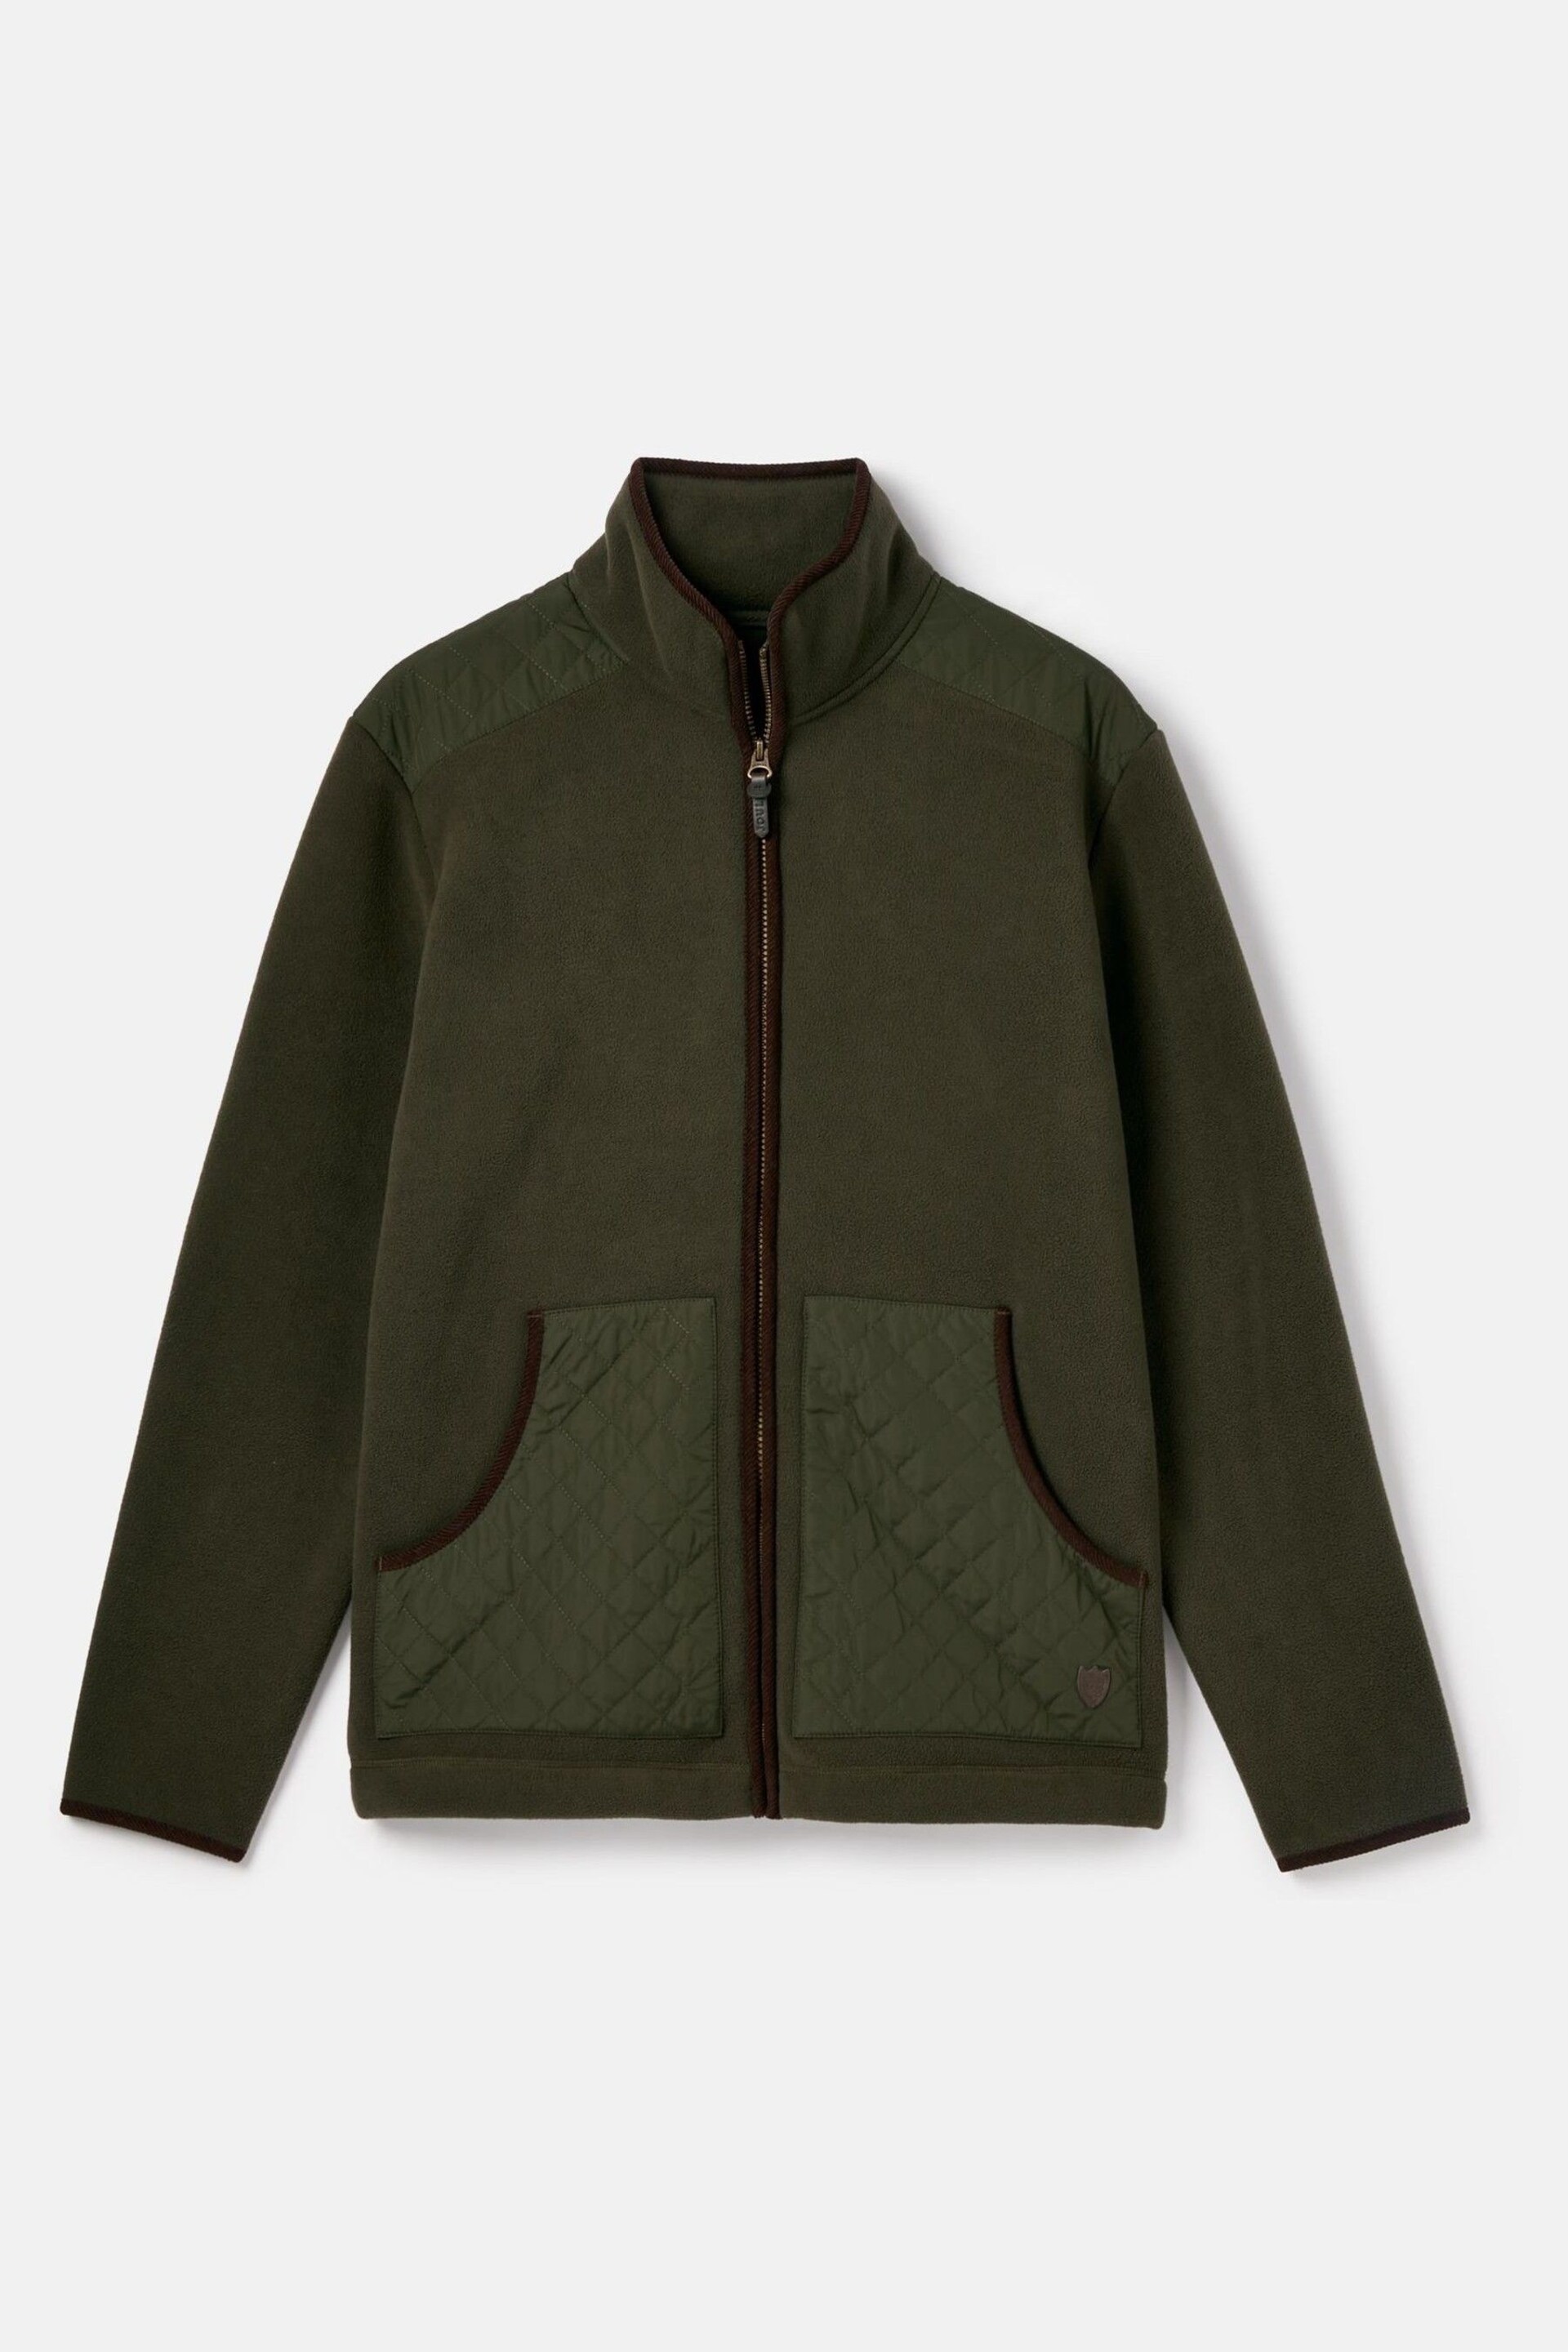 Joules Greenfield Green Full Zip Fleece Jacket - Image 7 of 7